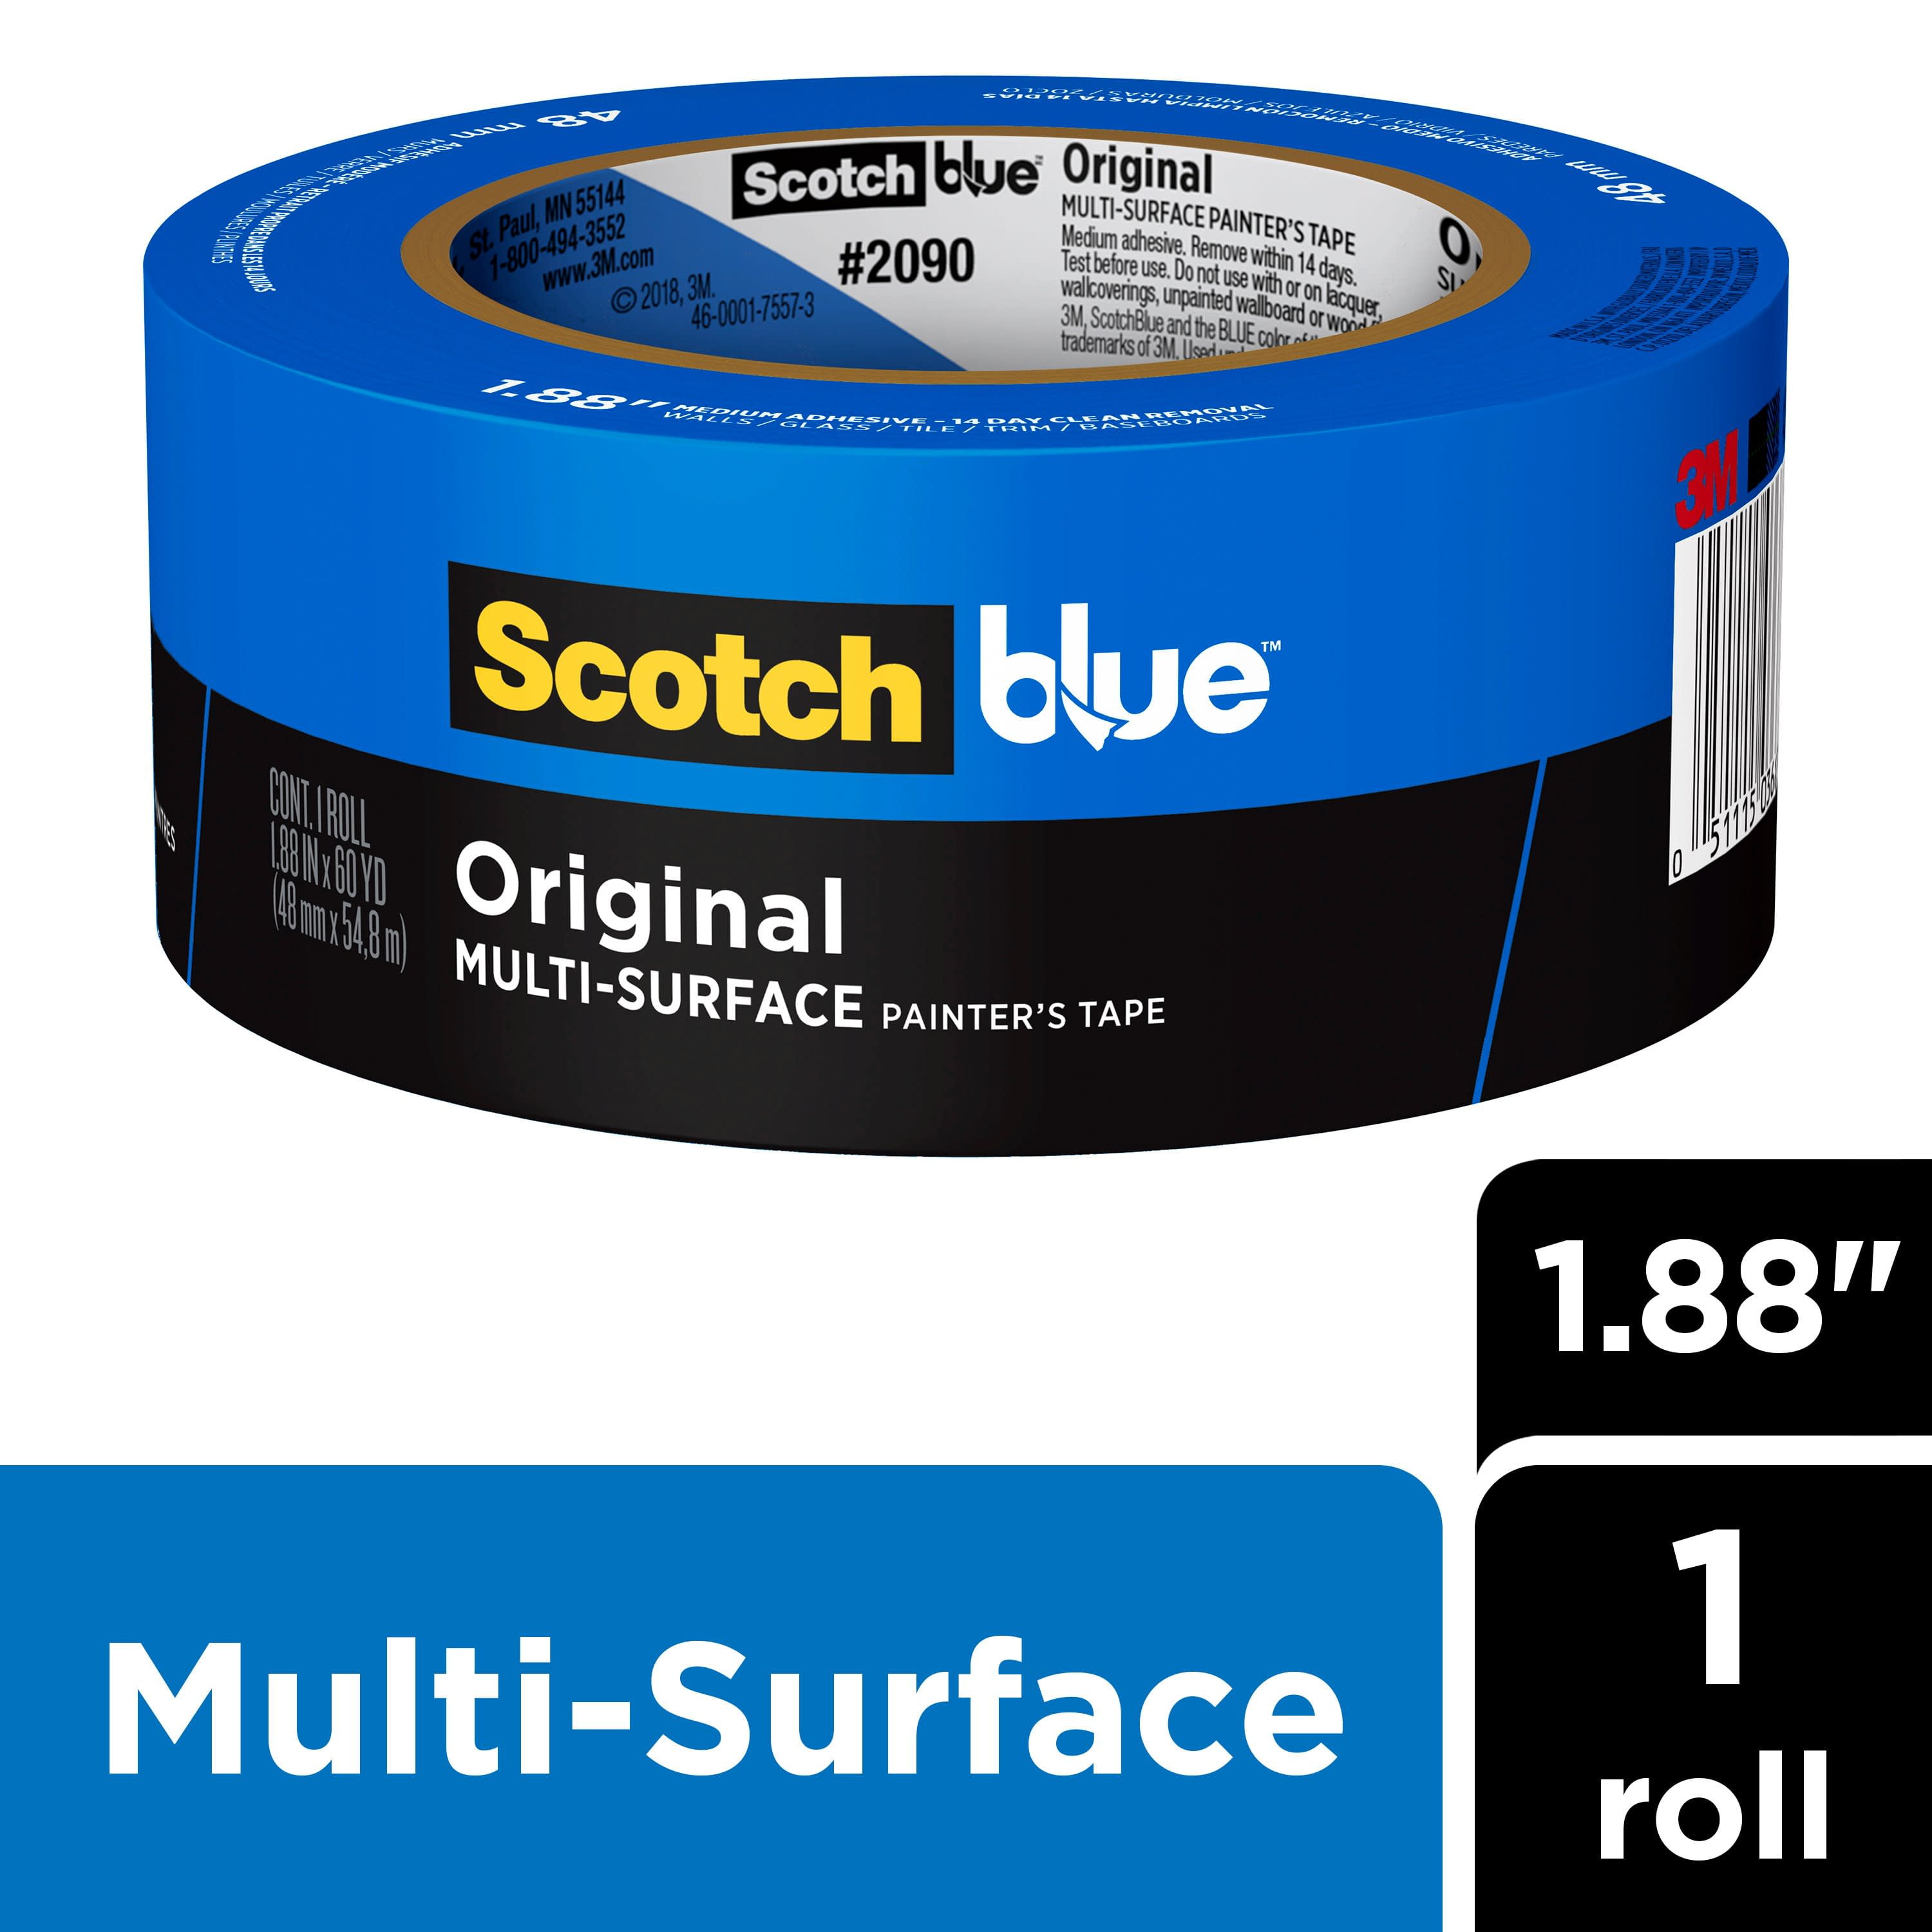 XFasten Professional Blue Painter's Tape, 1/2 Inch x 60-Yards